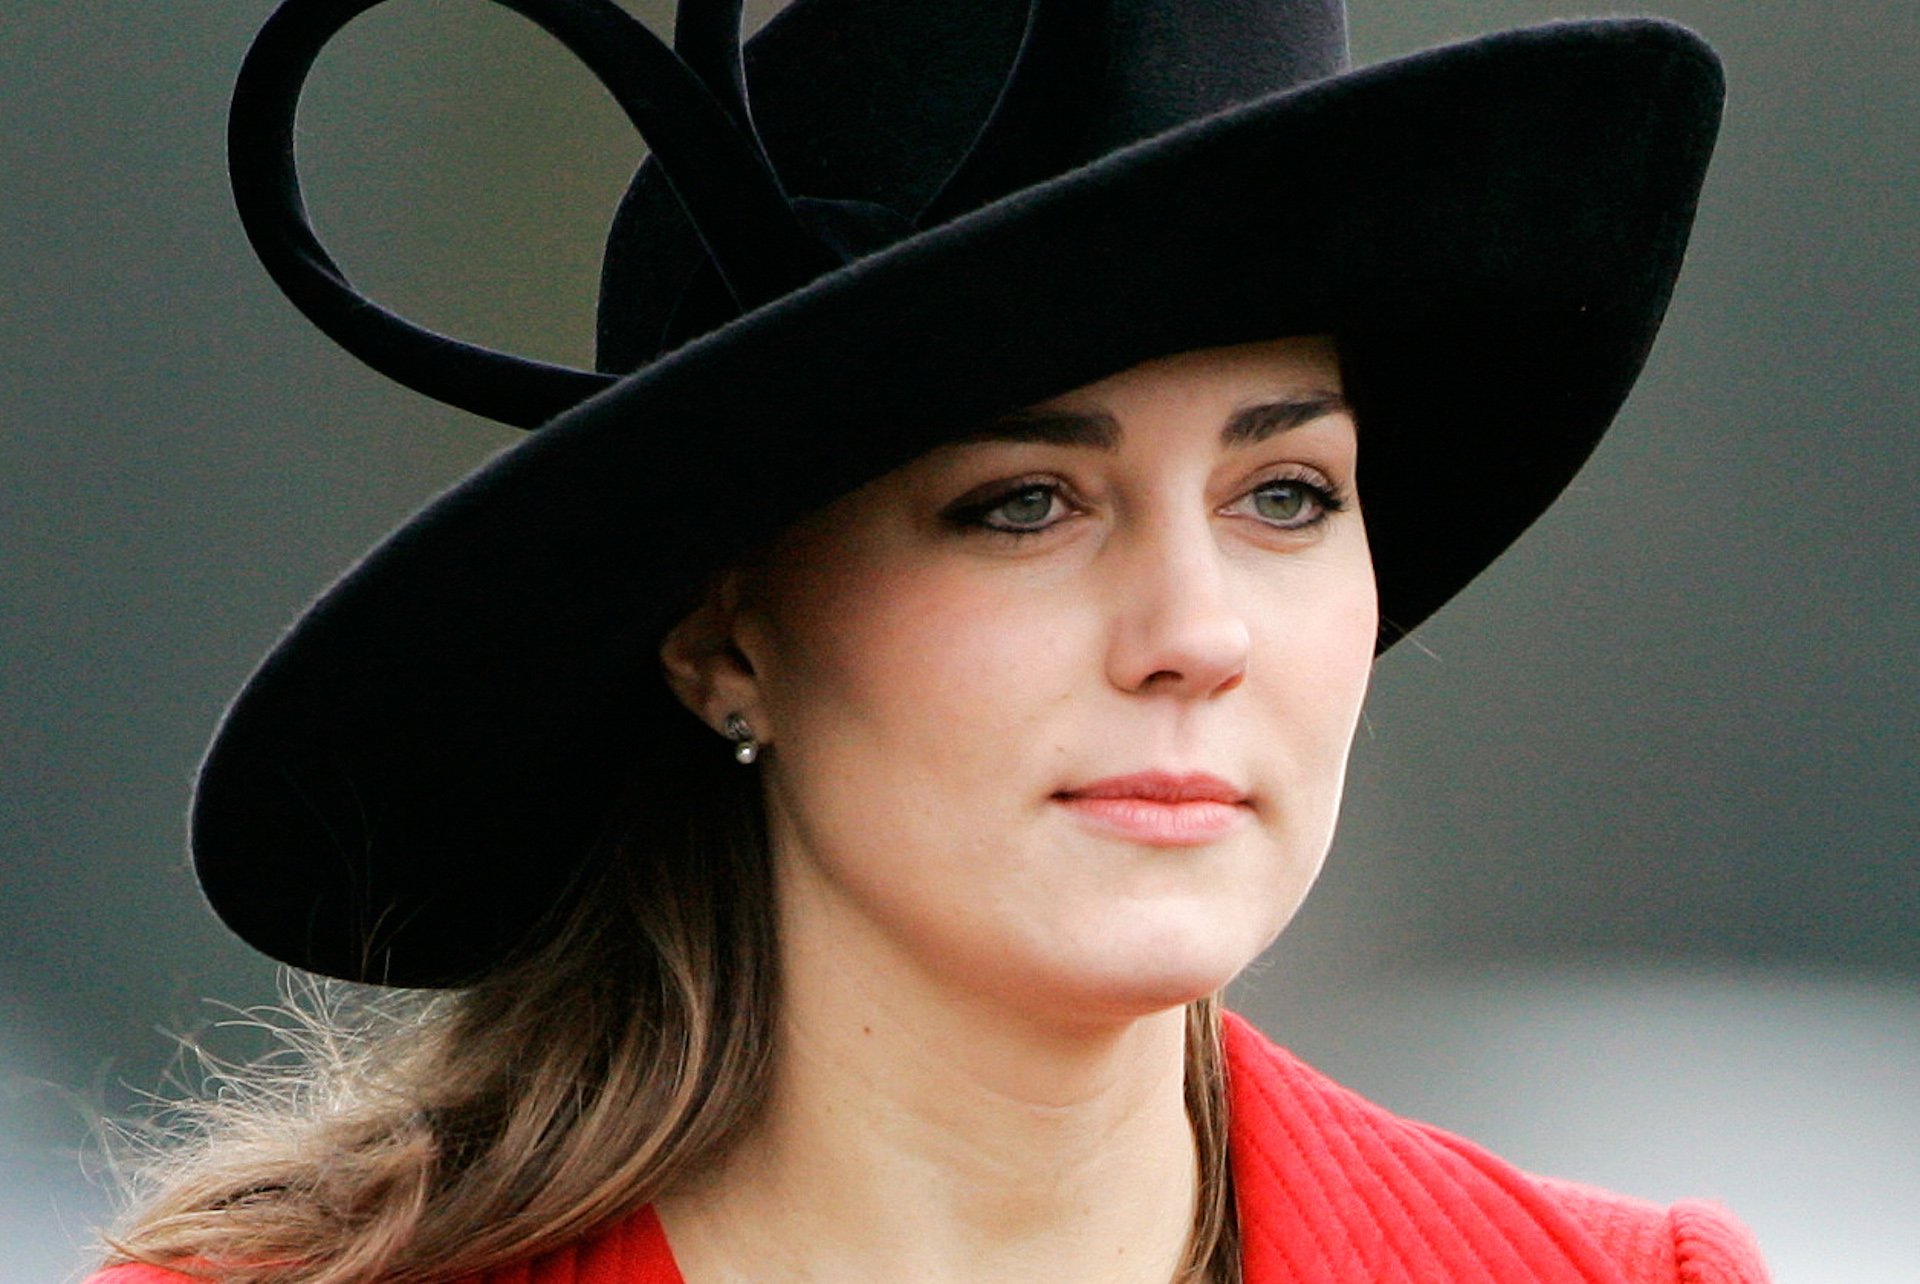 Humiliation for Kate Middleton?